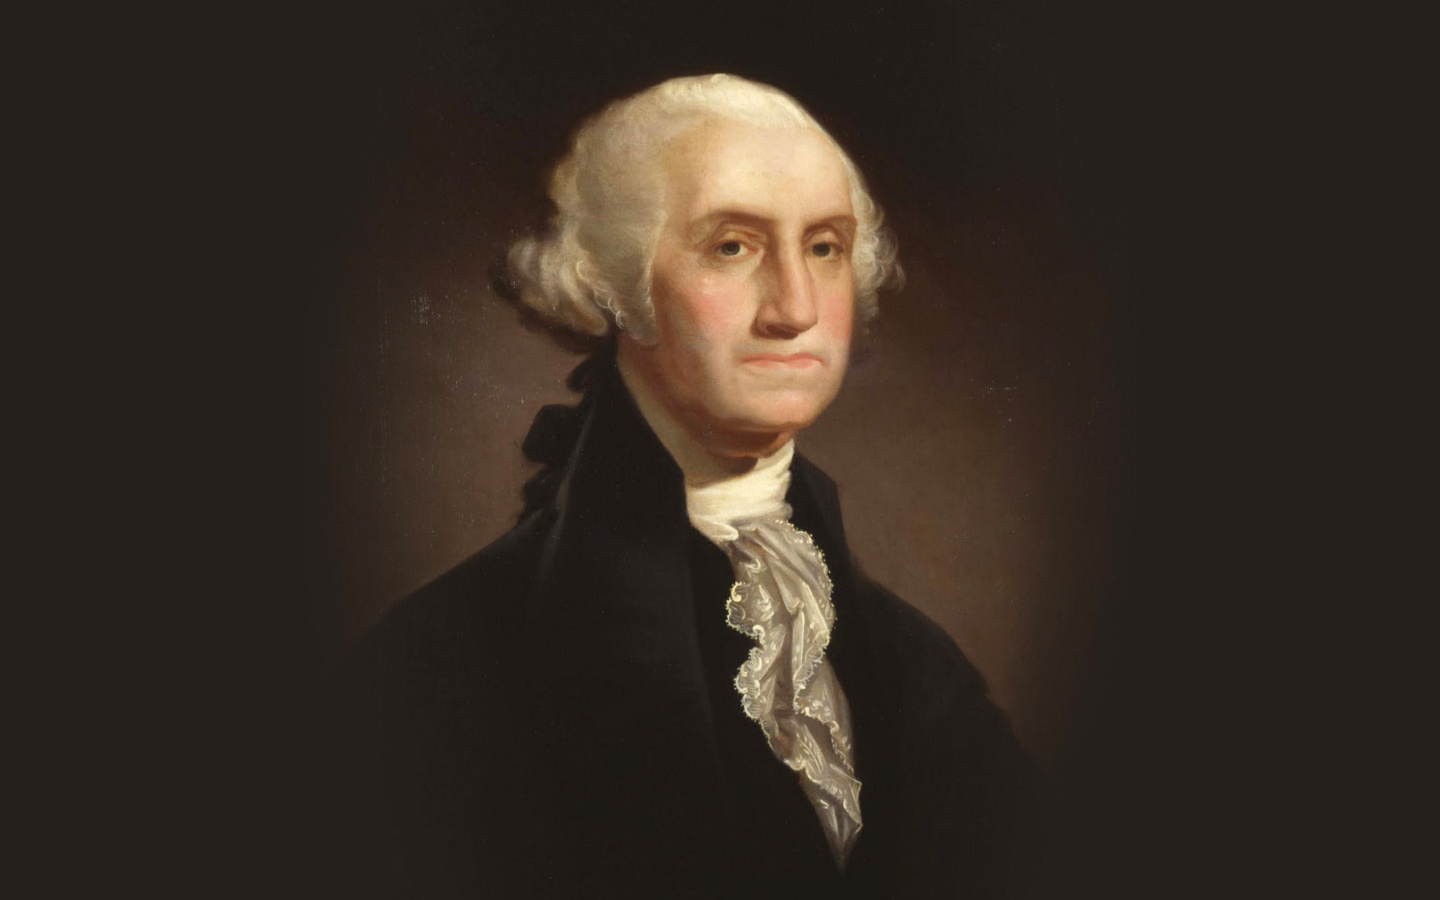 Das George Washington Wallpaper 1440x900